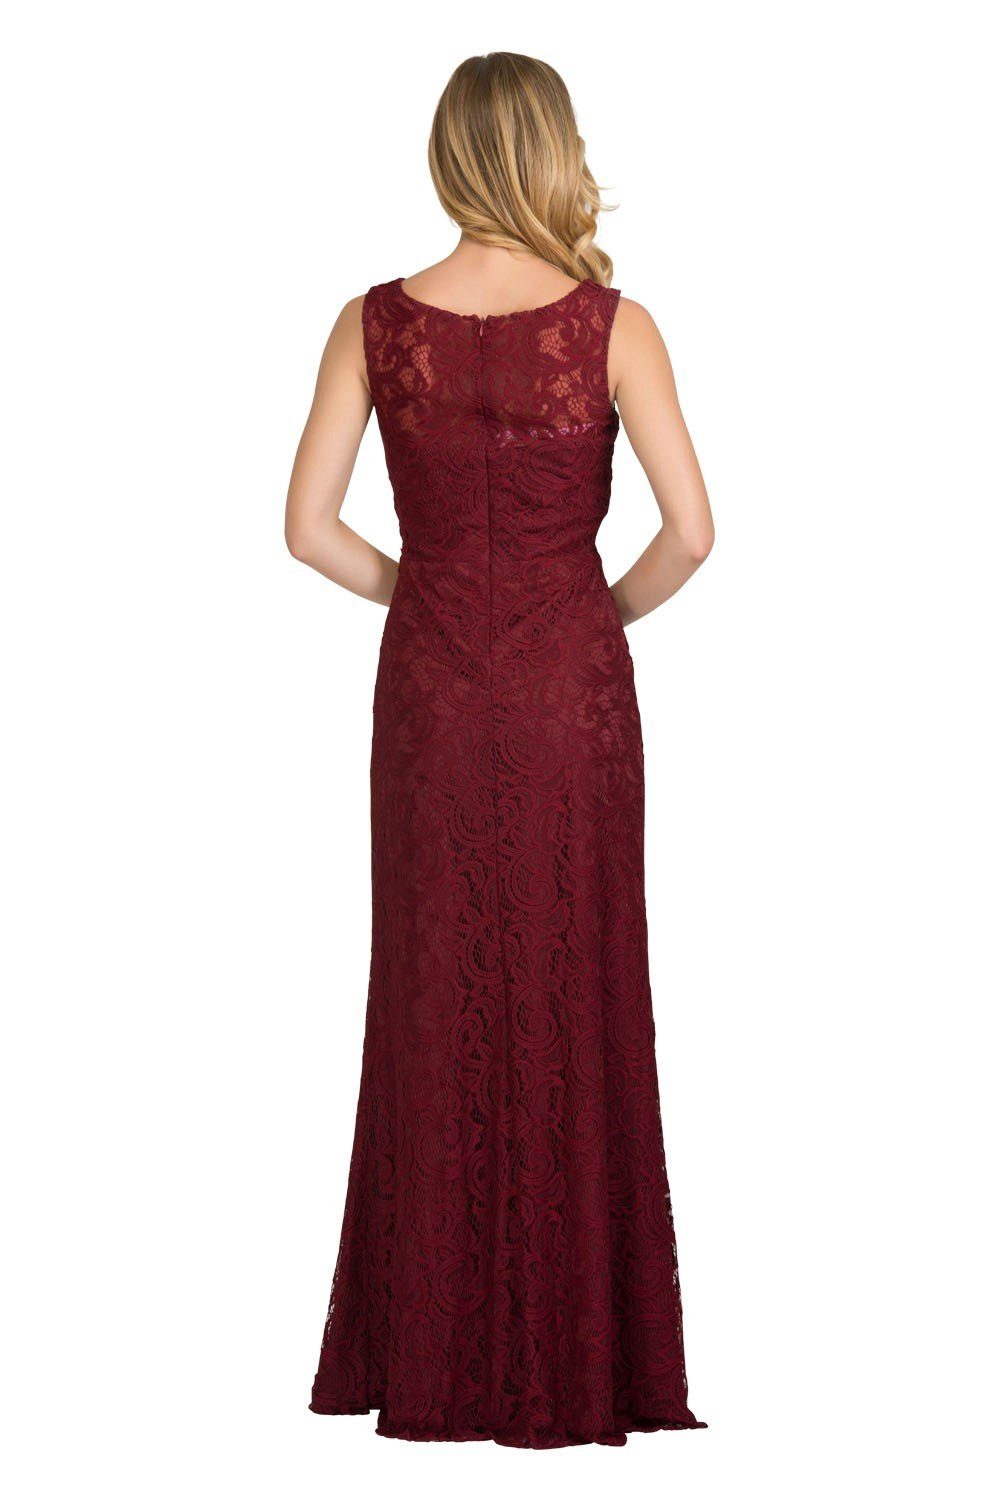 Long Mock Two Piece Lace Dress by Star Box 6193 – ABC Fashion